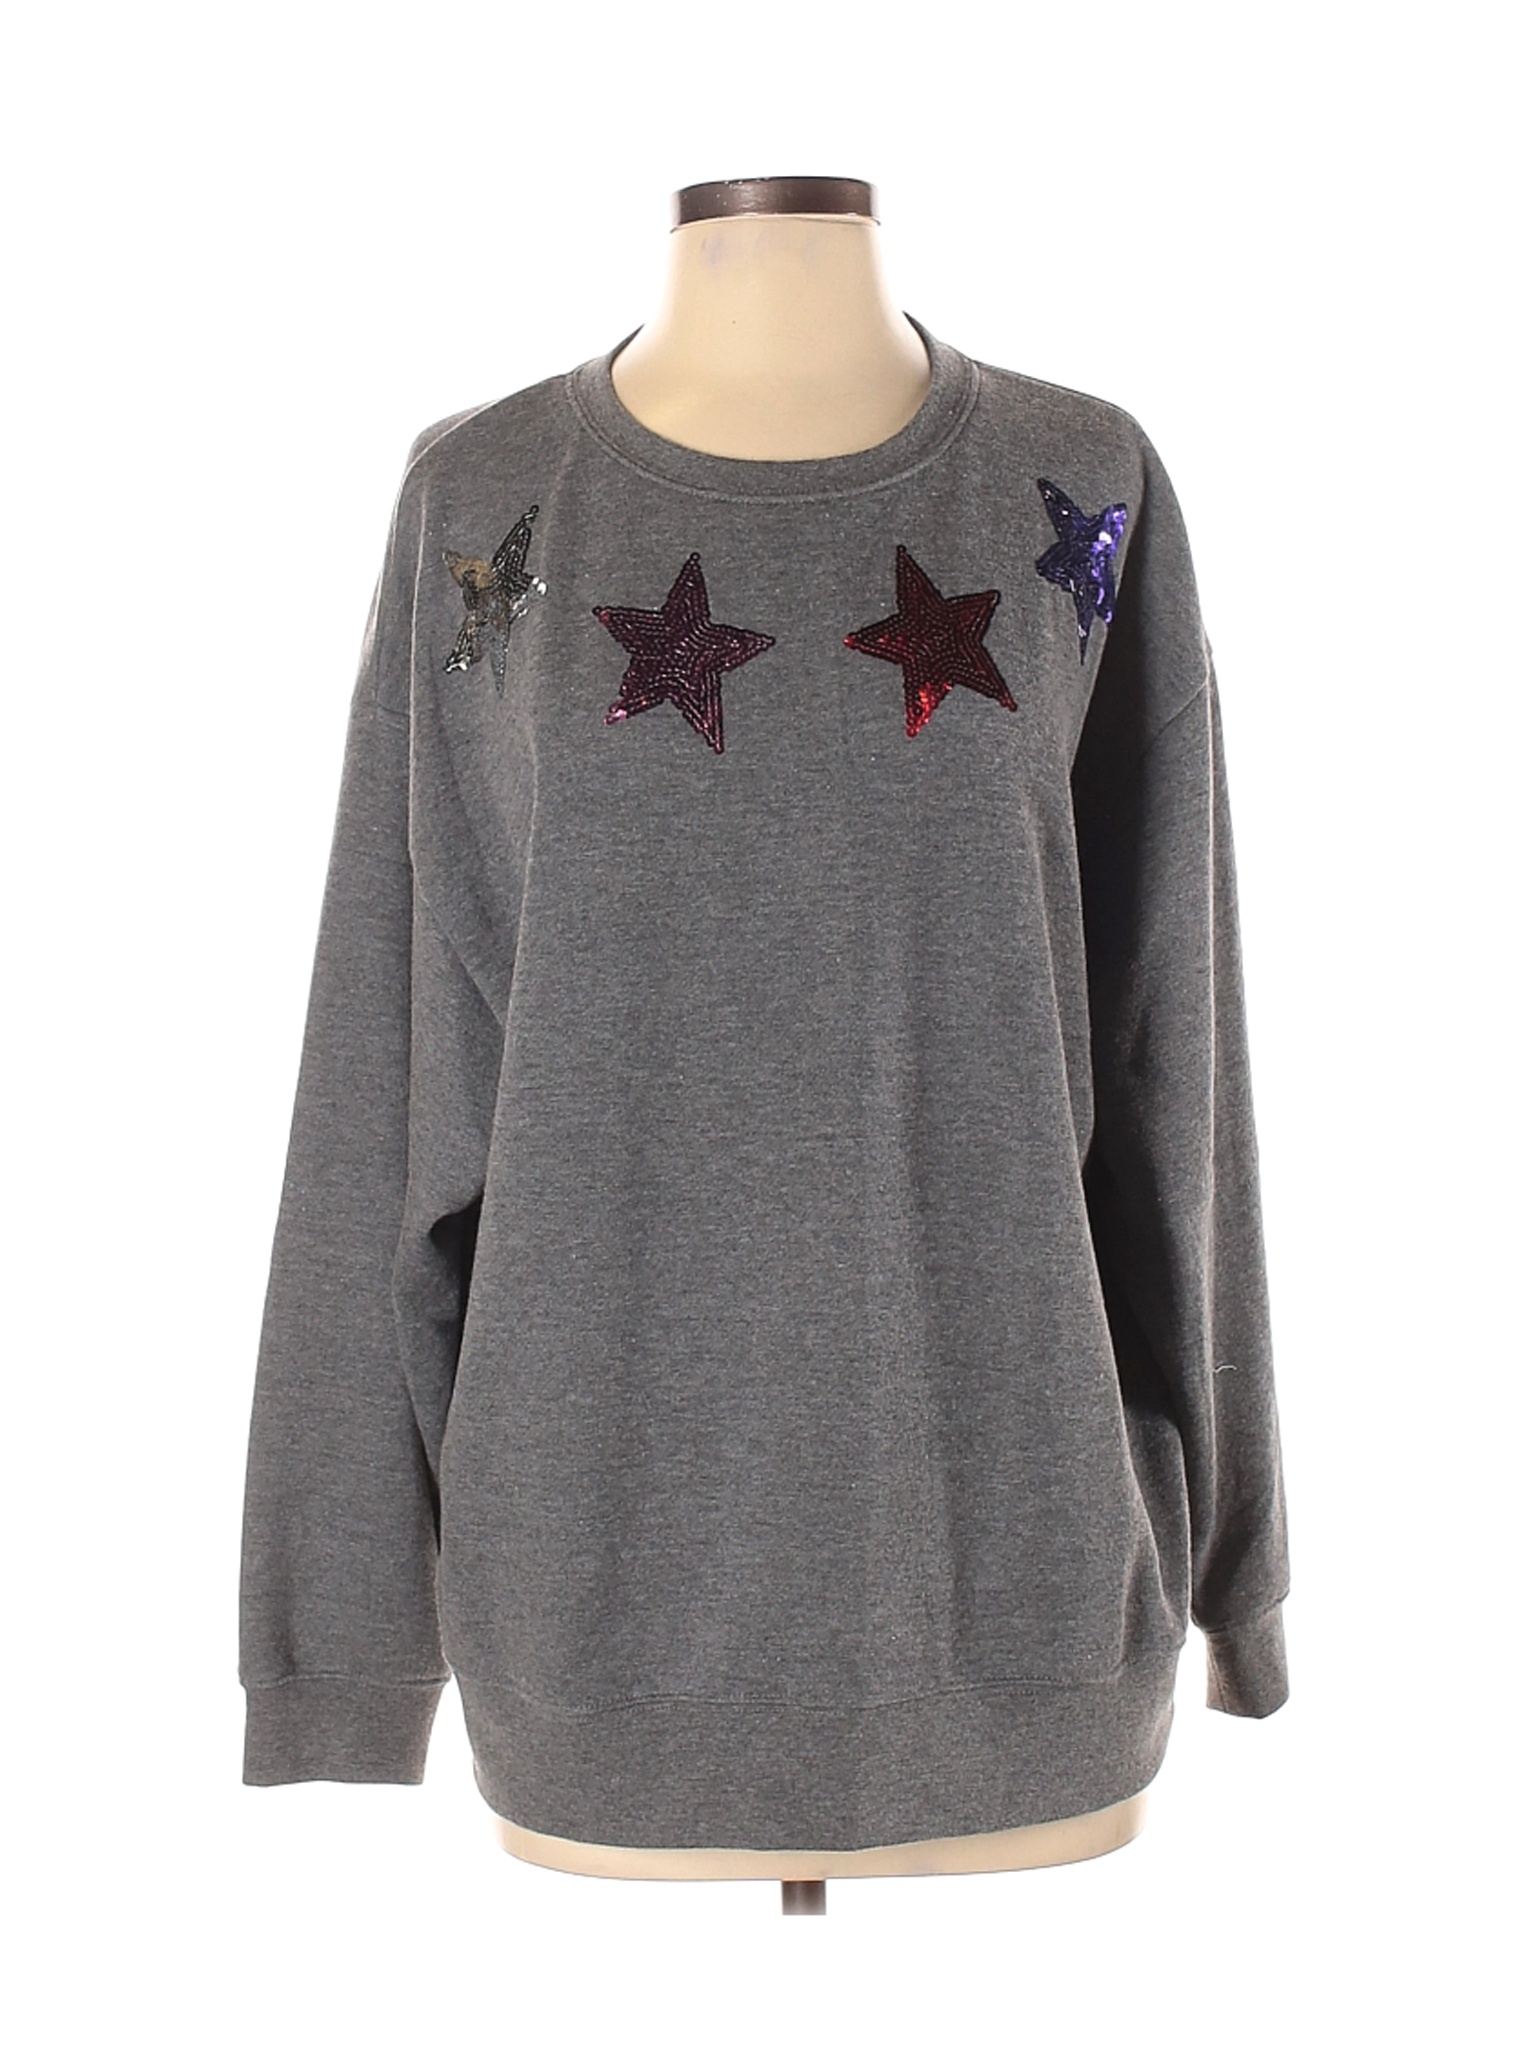 South Parade Women Gray Sweatshirt XS | eBay